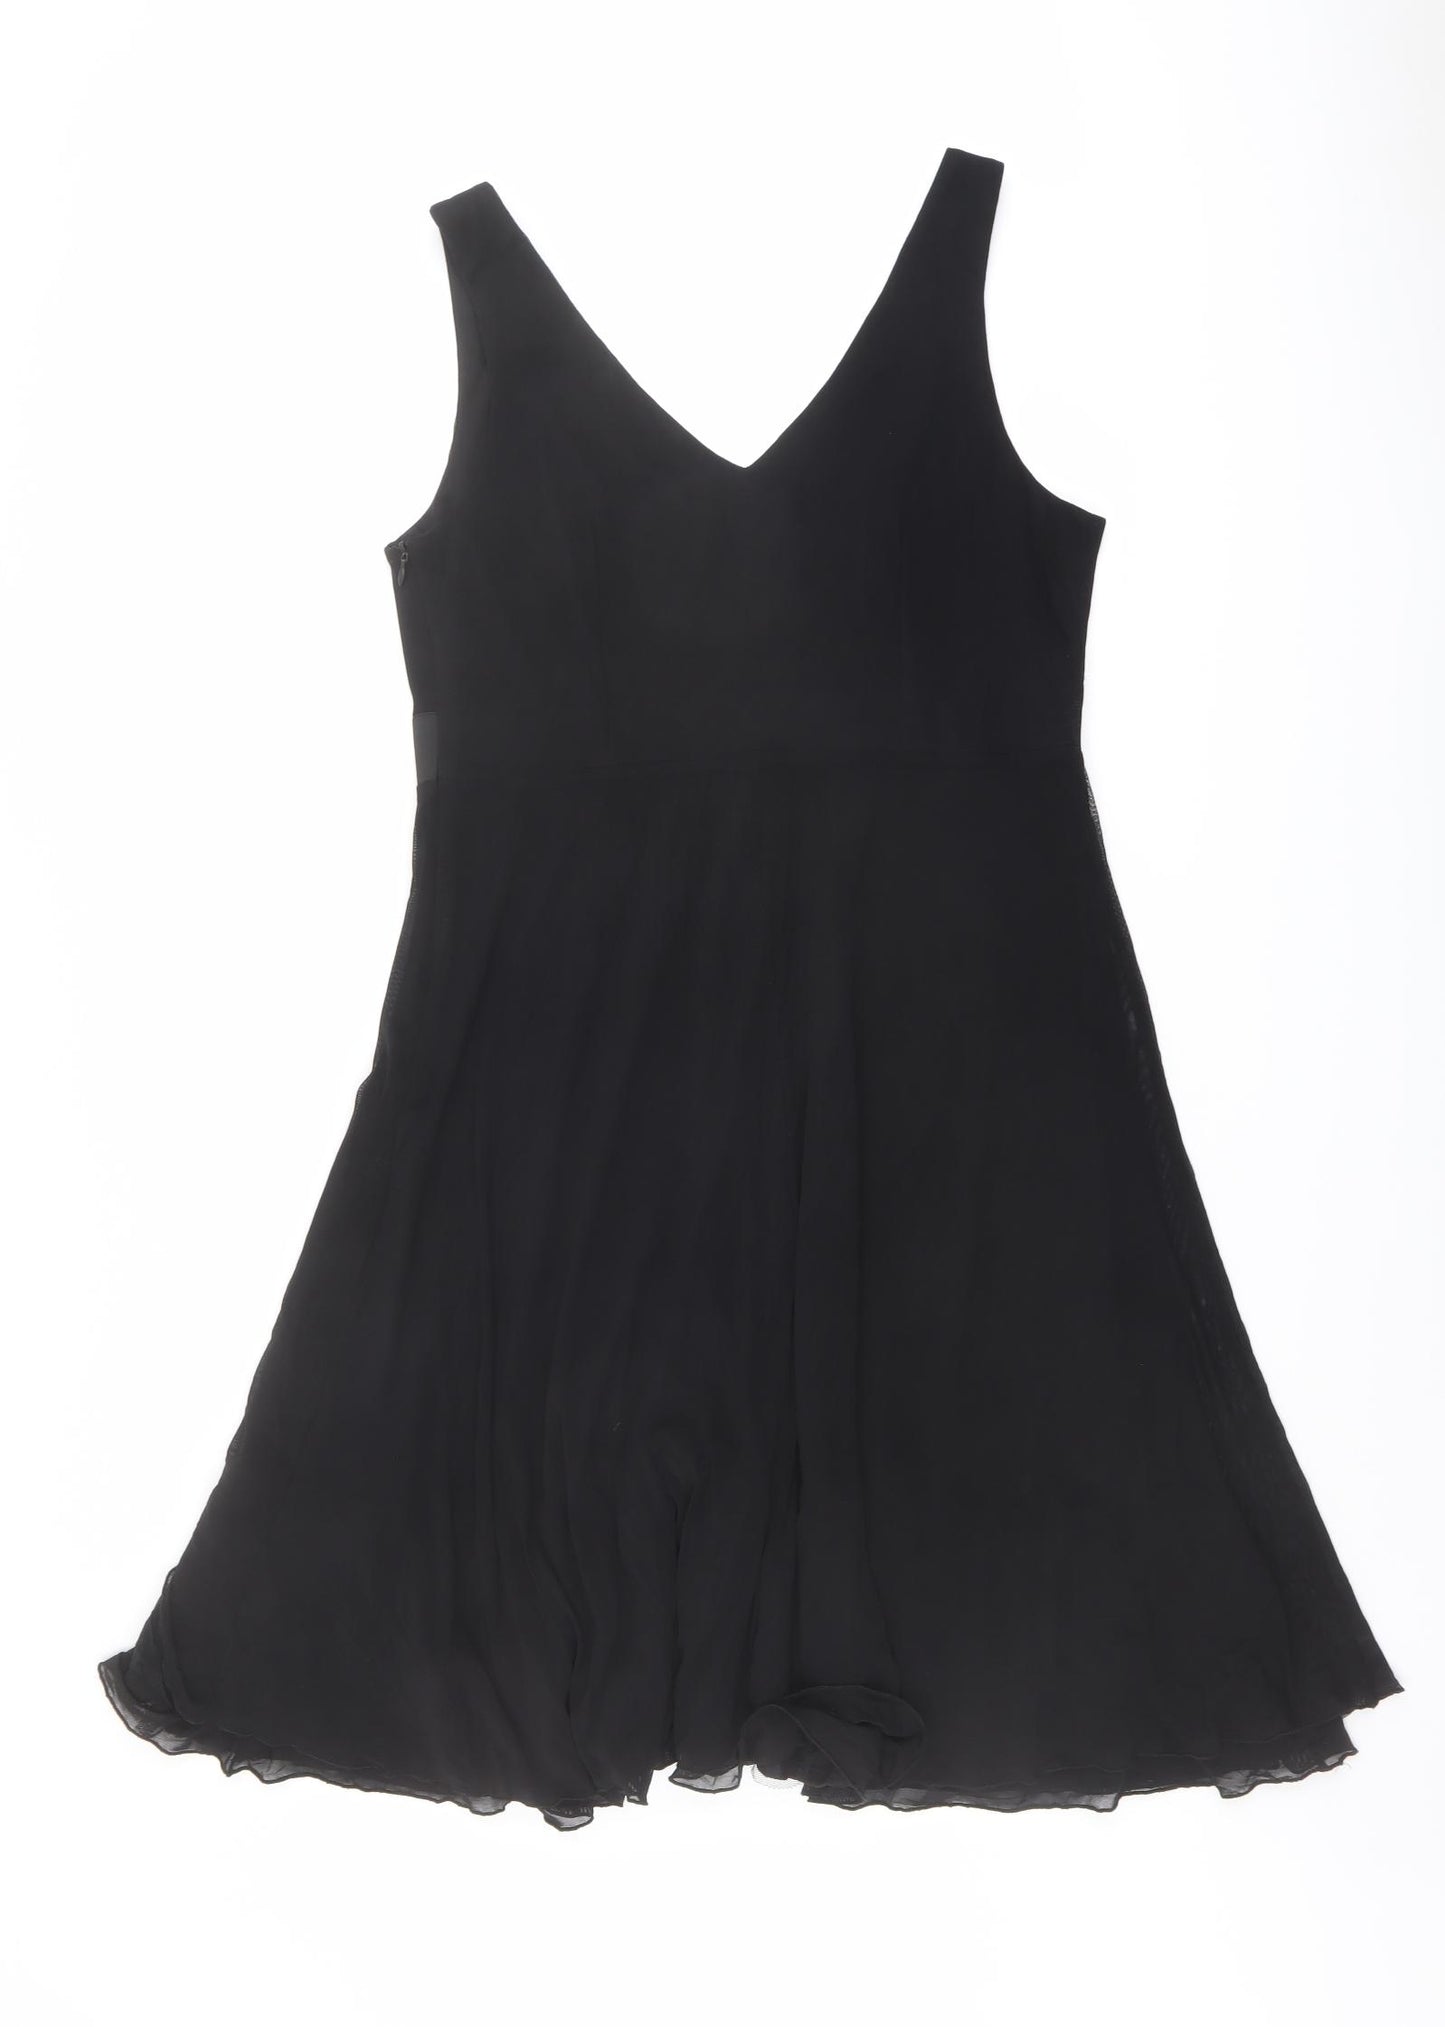 NEXT Womens Black Polyester A-Line Size 14 V-Neck Zip